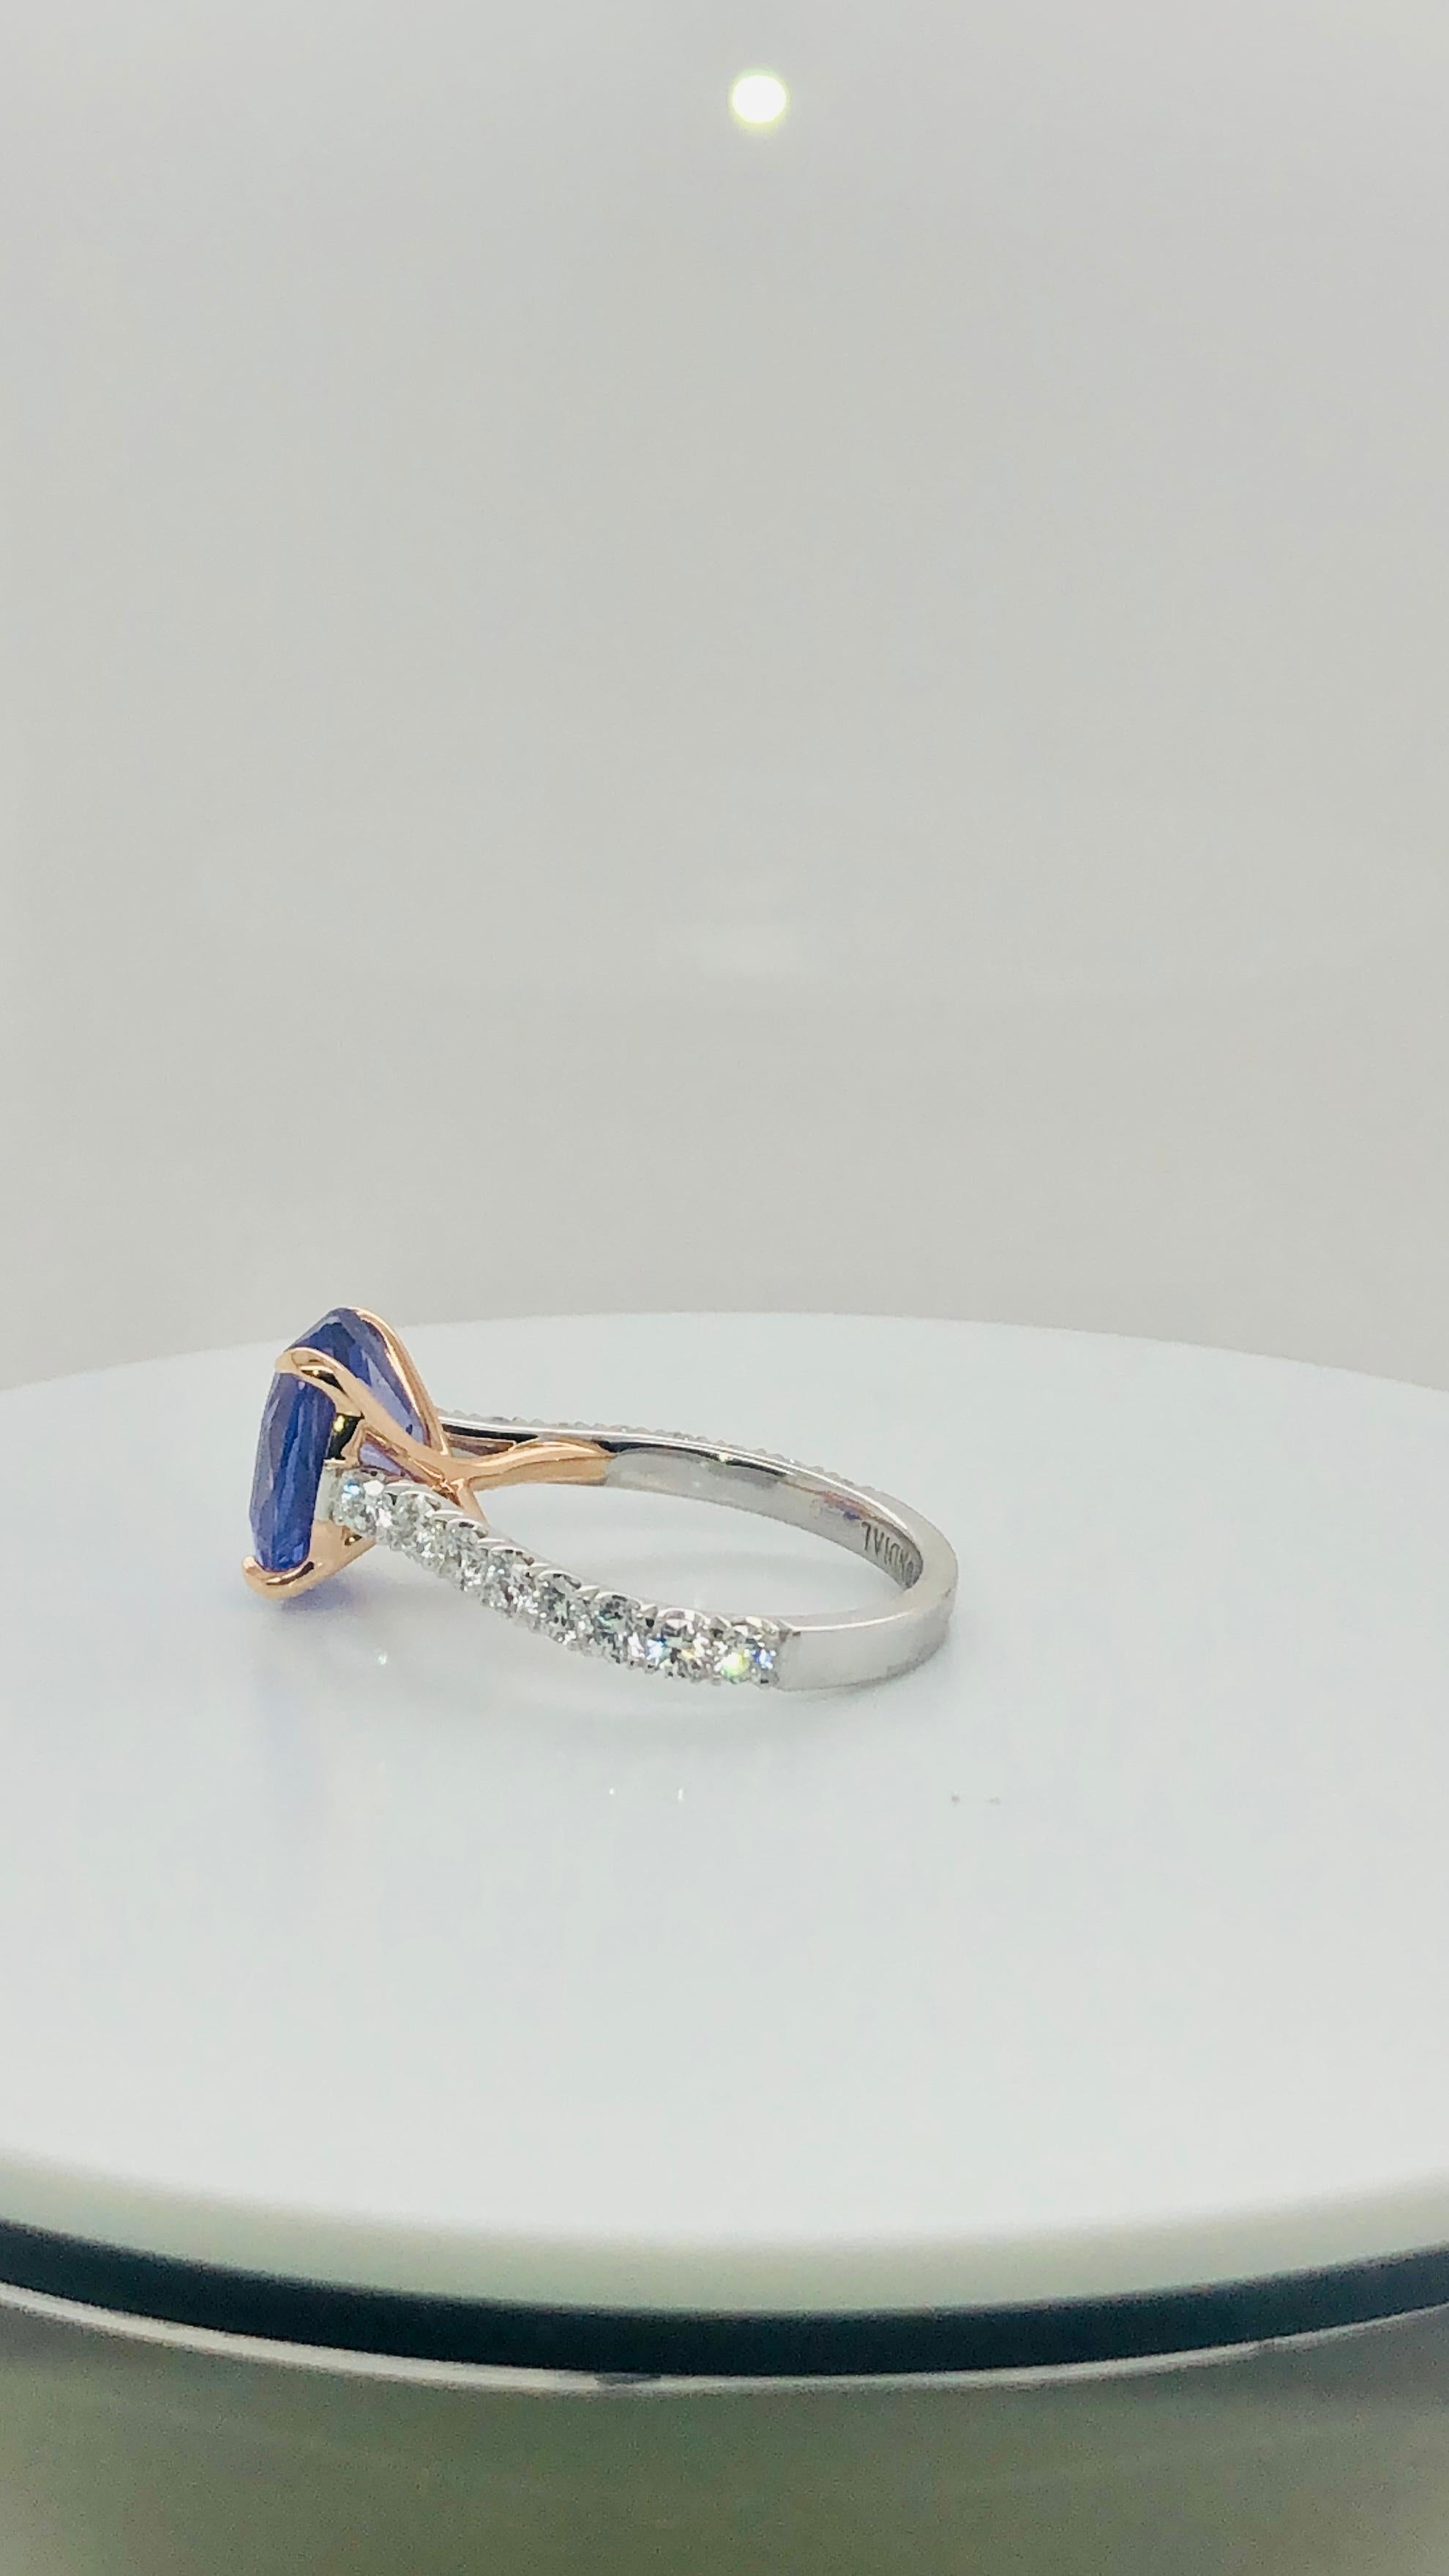 Certified Natural 5.23 Carat Sri Lankan Purple Sapphire Diamond Engagement Ring For Sale 2